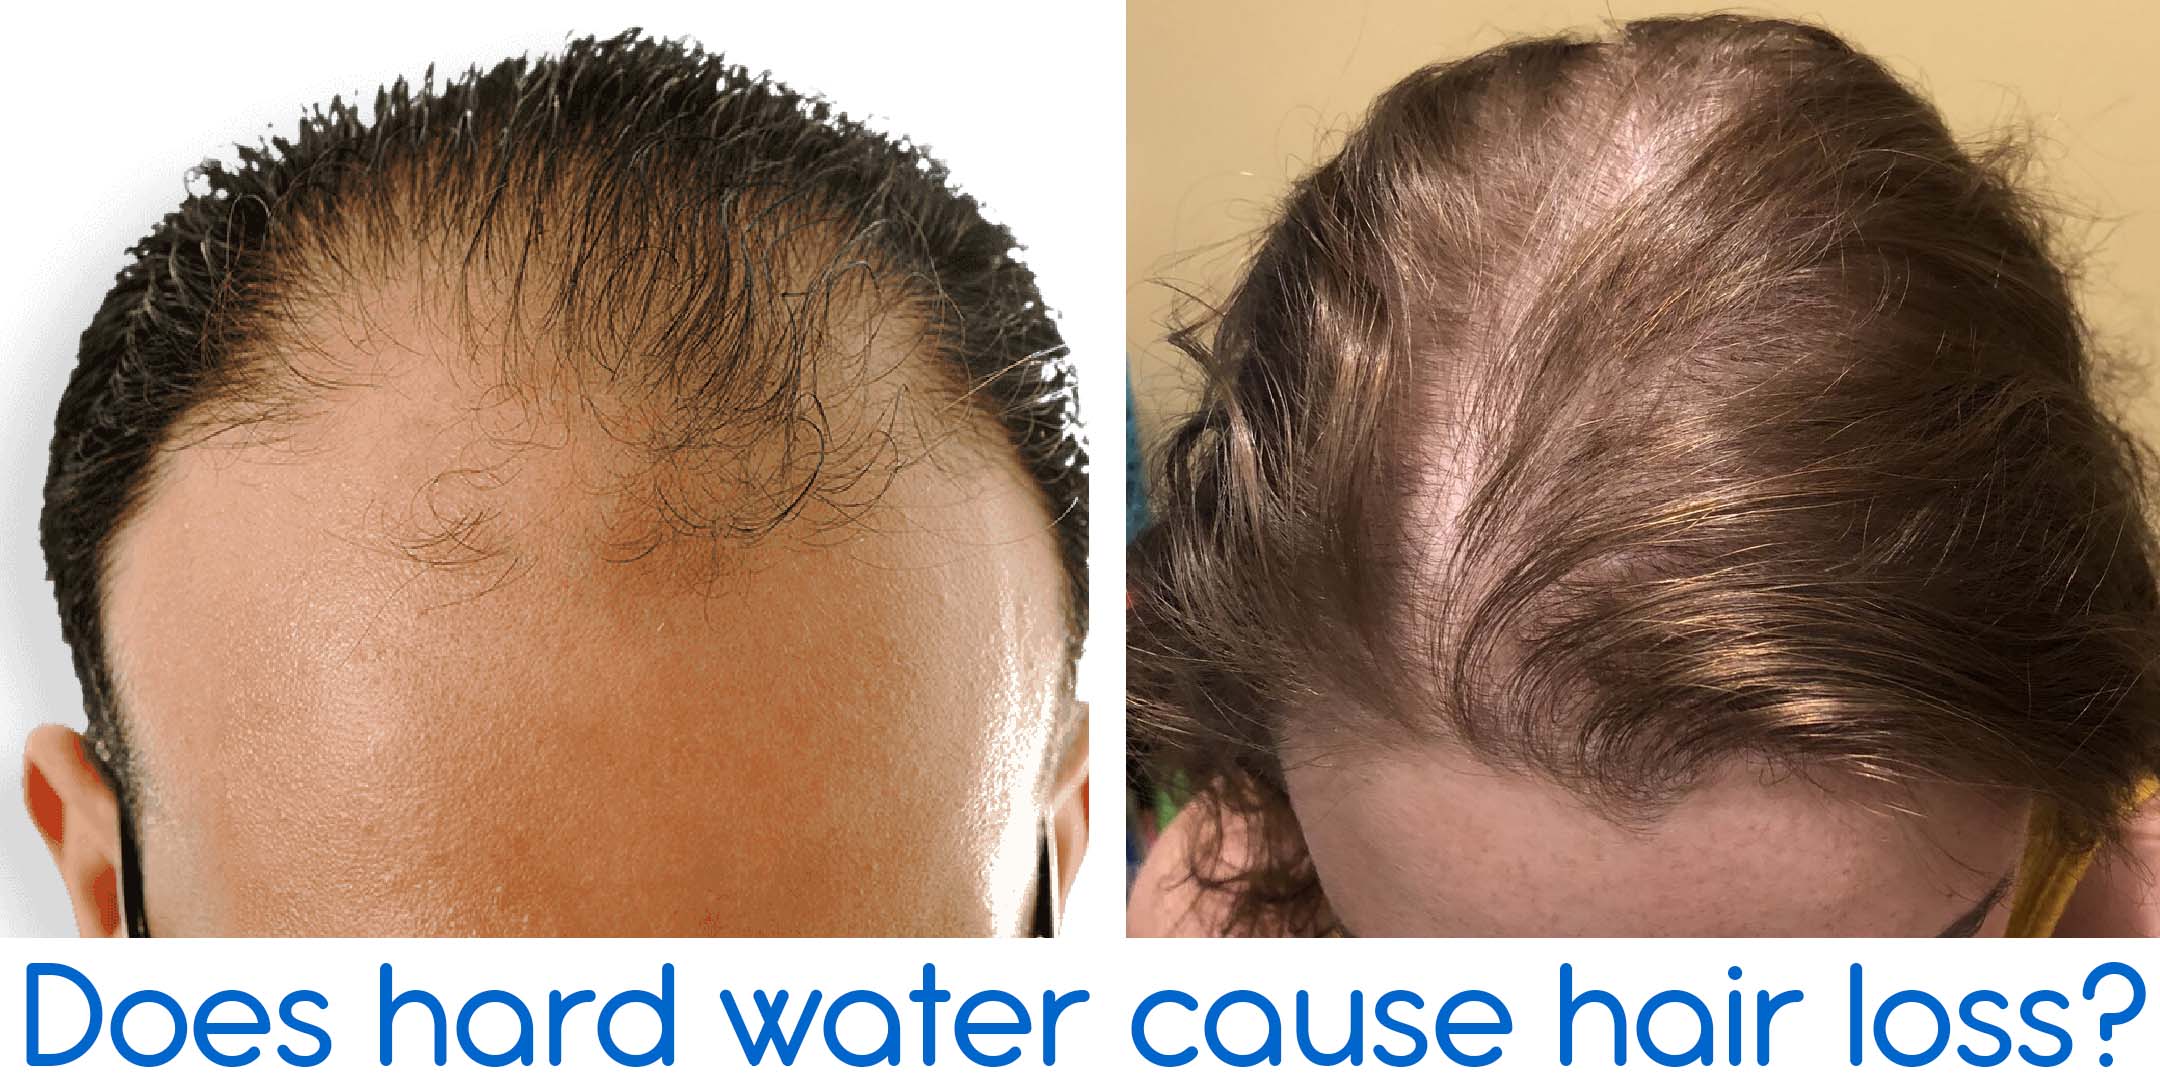 Does hard water cause hair loss?